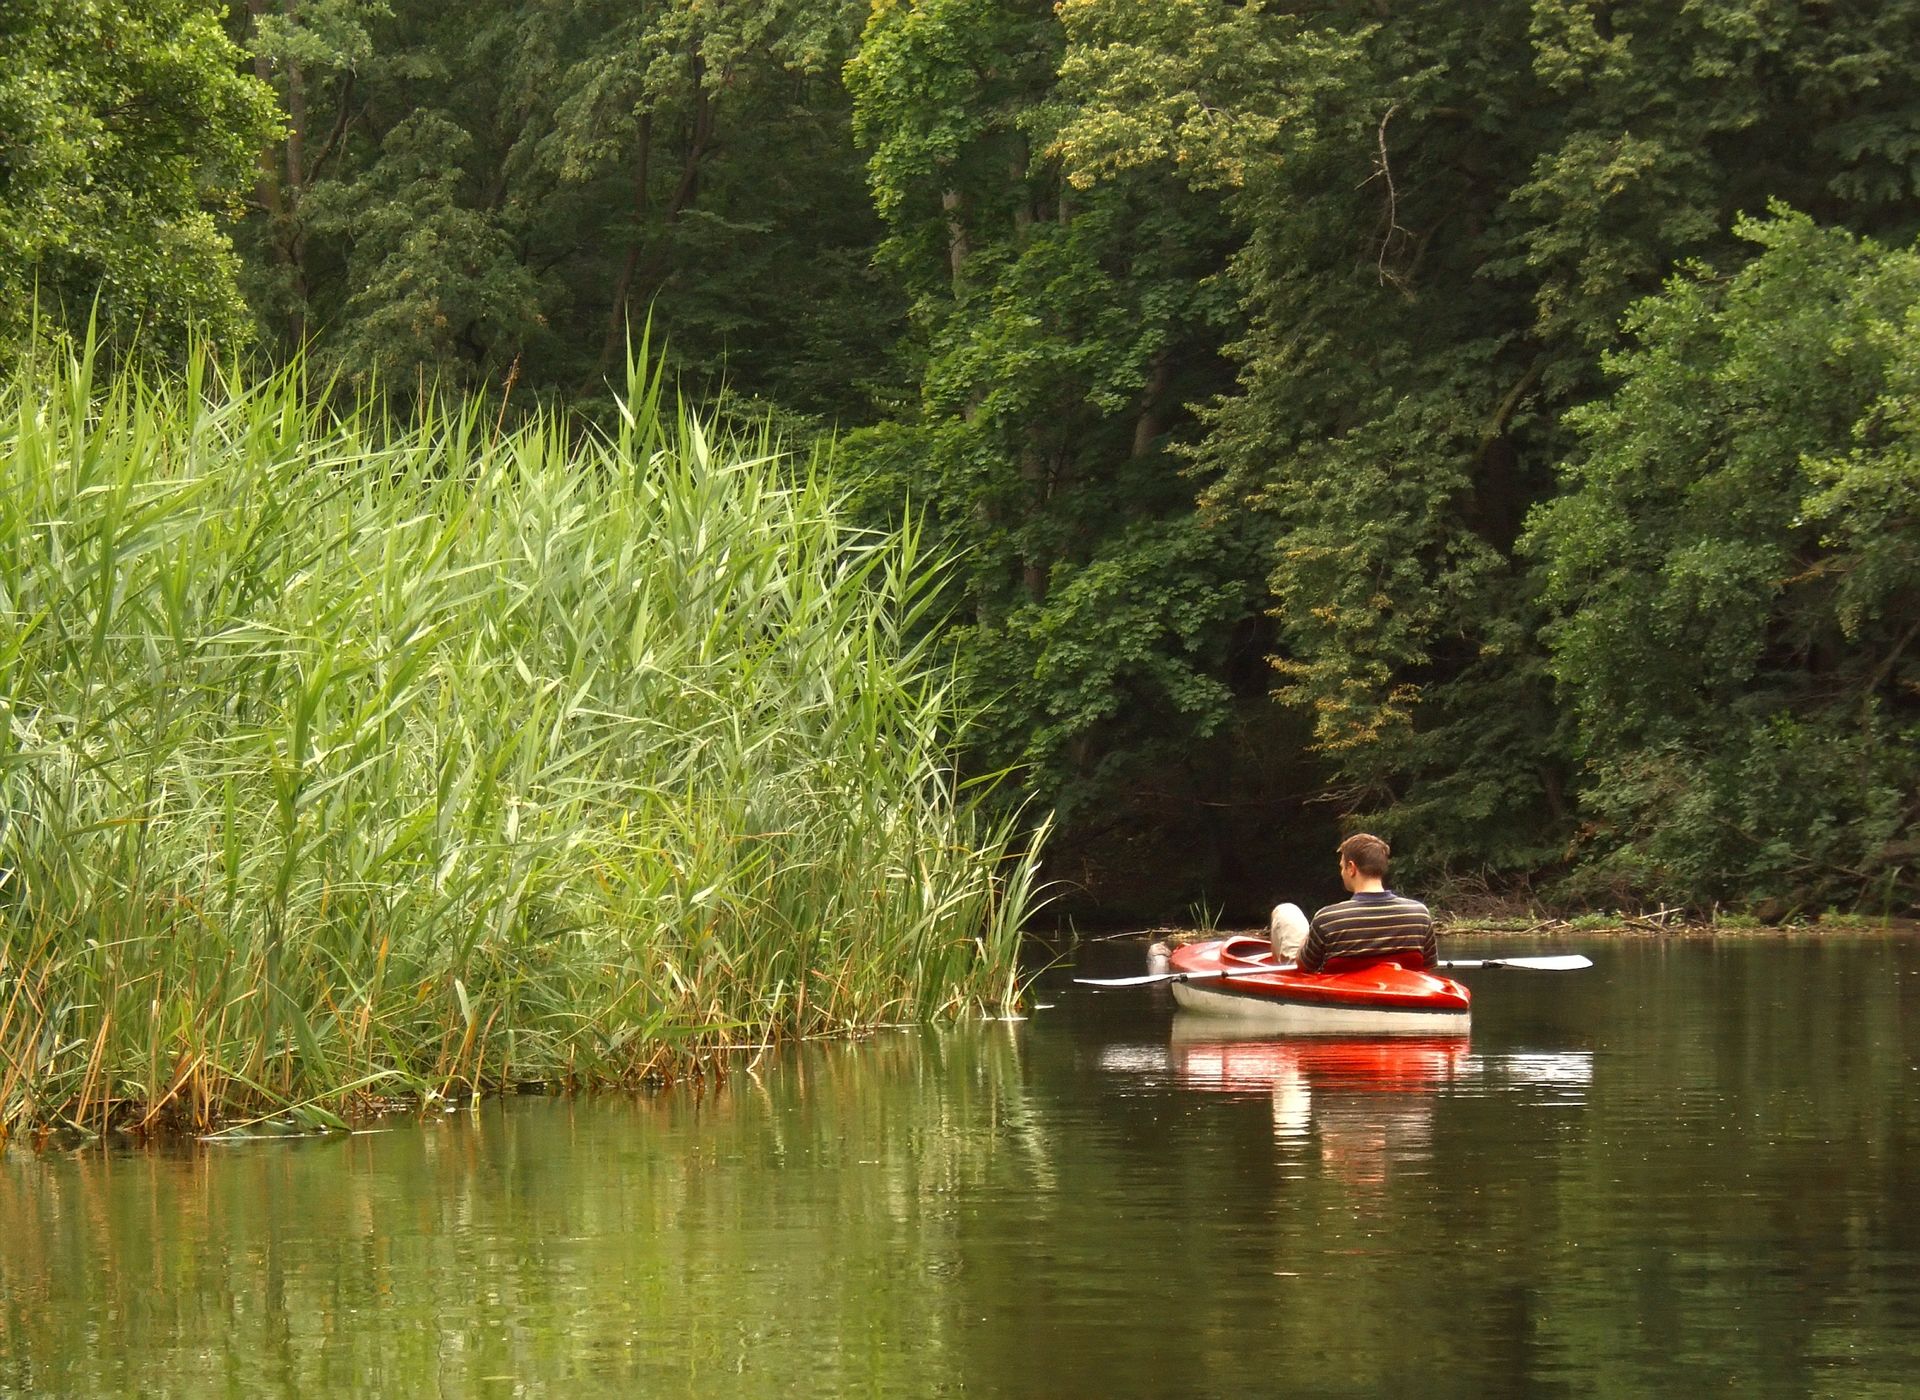 Canoeing on the Recknitz